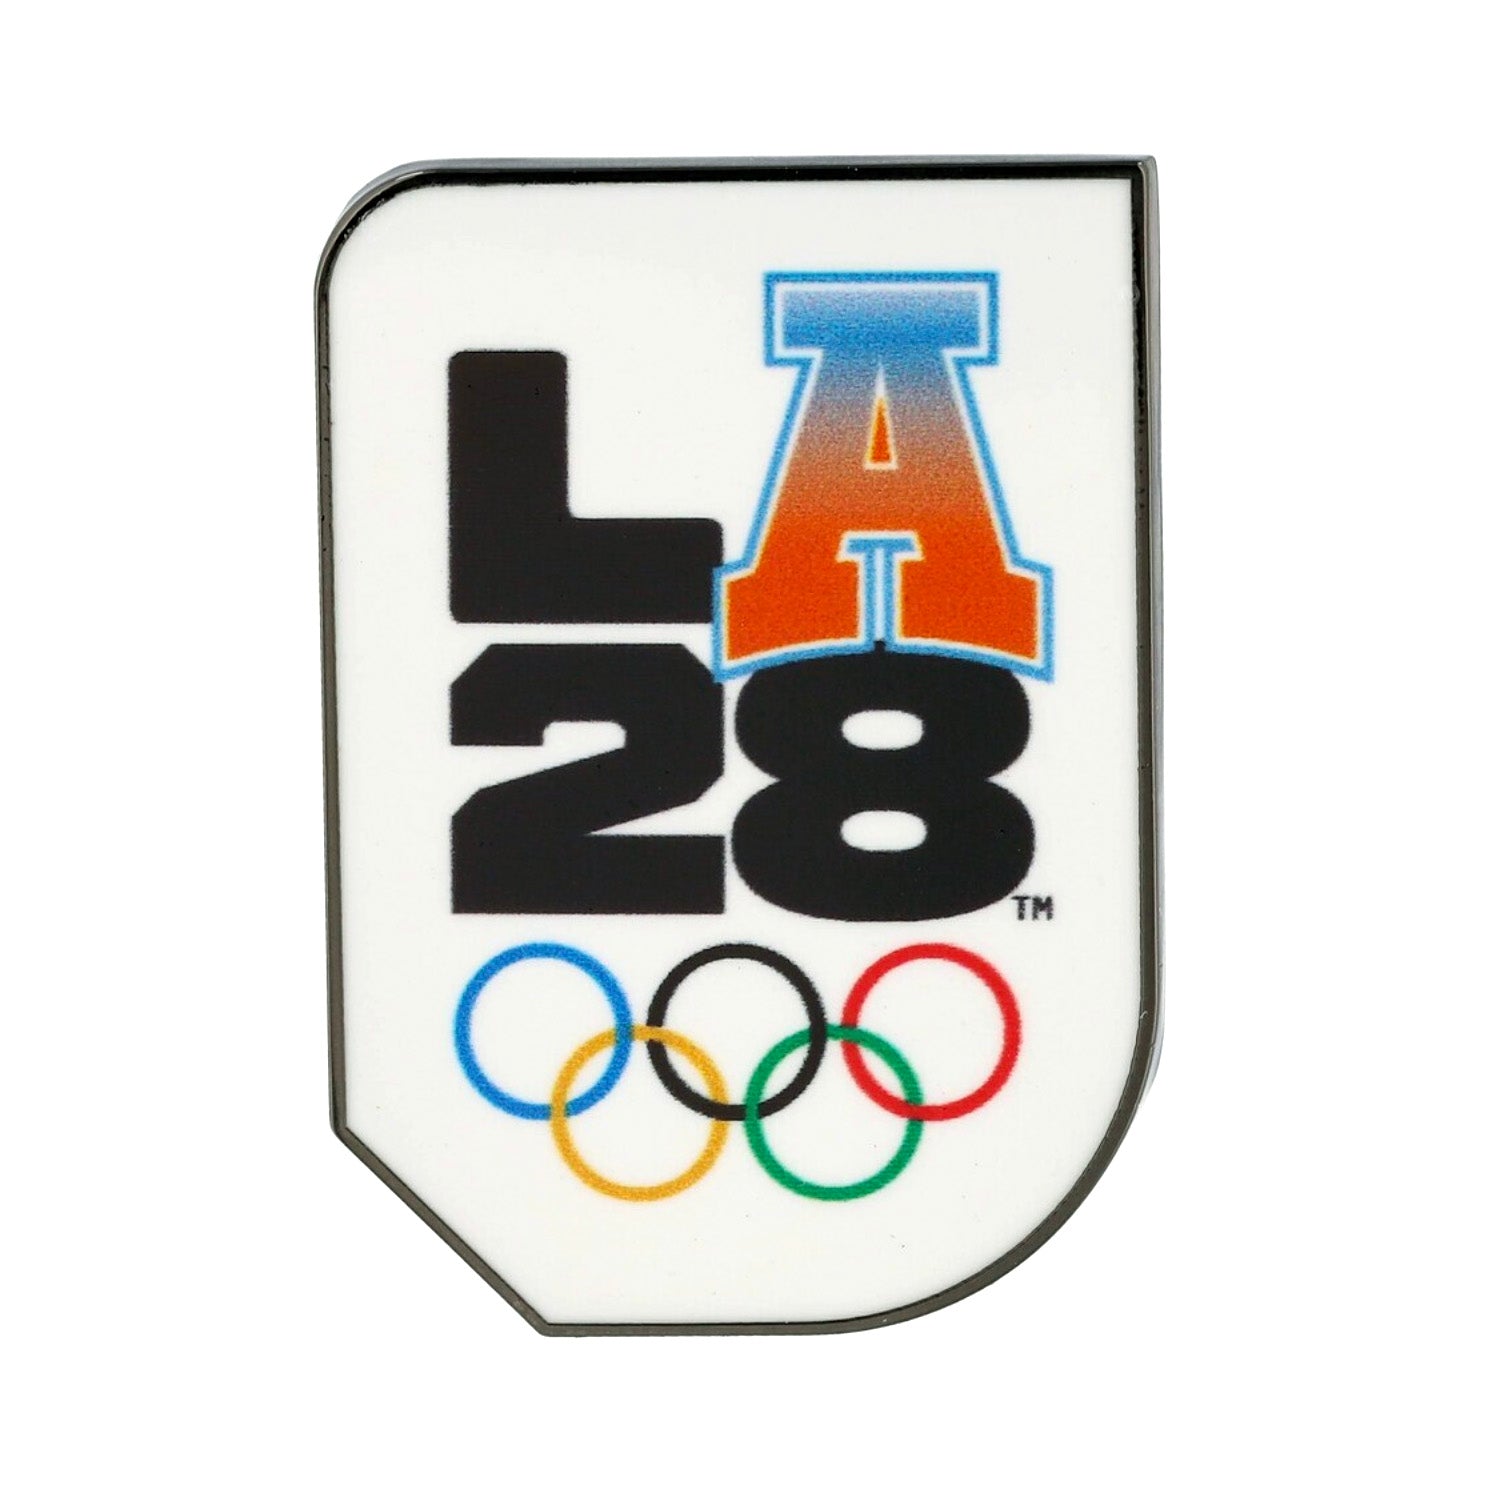 LA 2028 Olympics Logo in Varsity